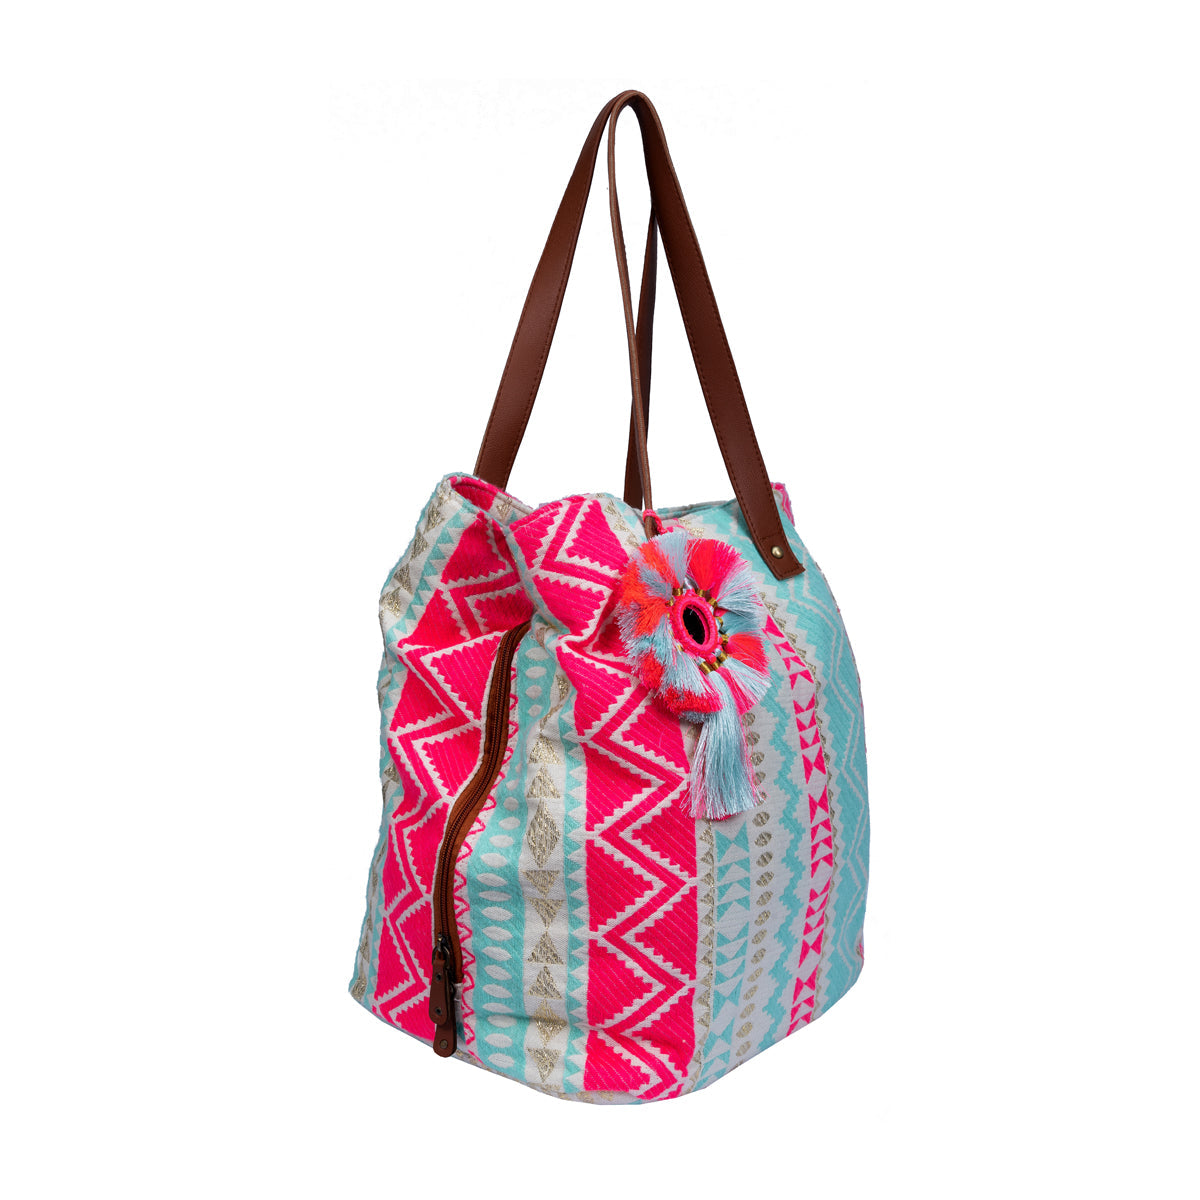 Neon Pink Three Pocket Jacquard Bag